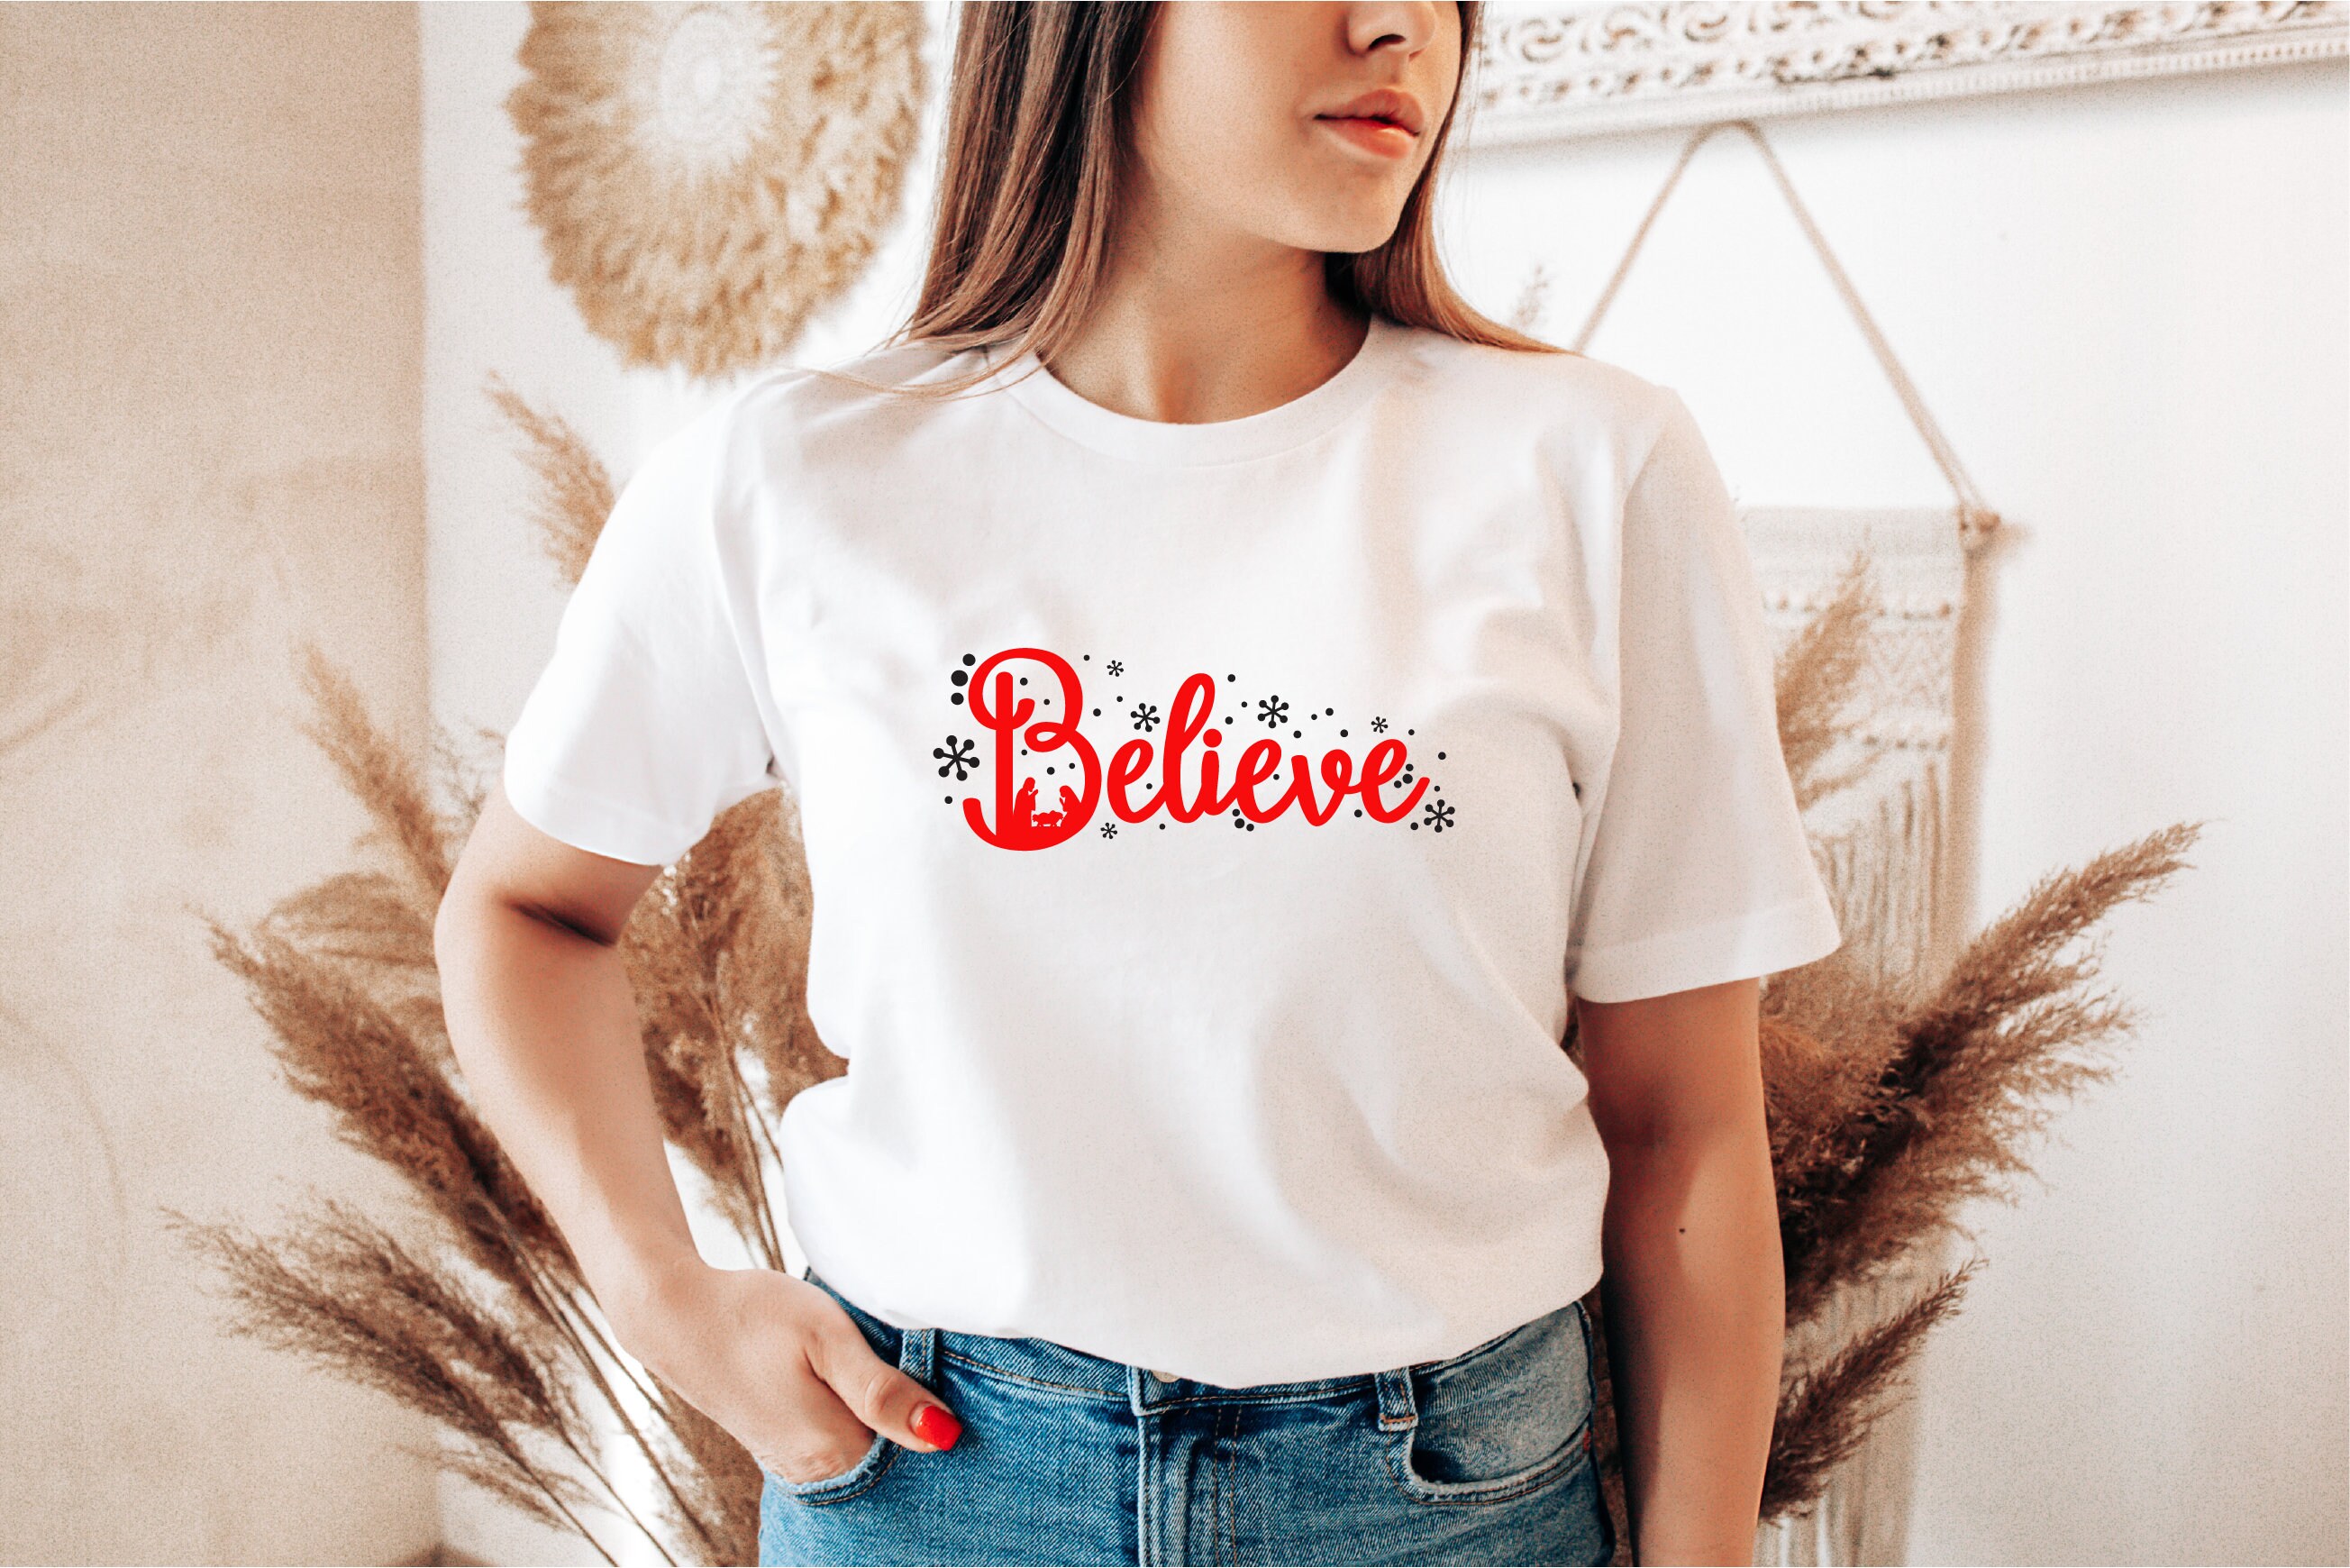 Discover Believe Christmas Shirt, Christmas Believe Shirt, Christmas Party Shirt, Christmas T-Shirt, Christmas Family Shirt, Believe Shirt